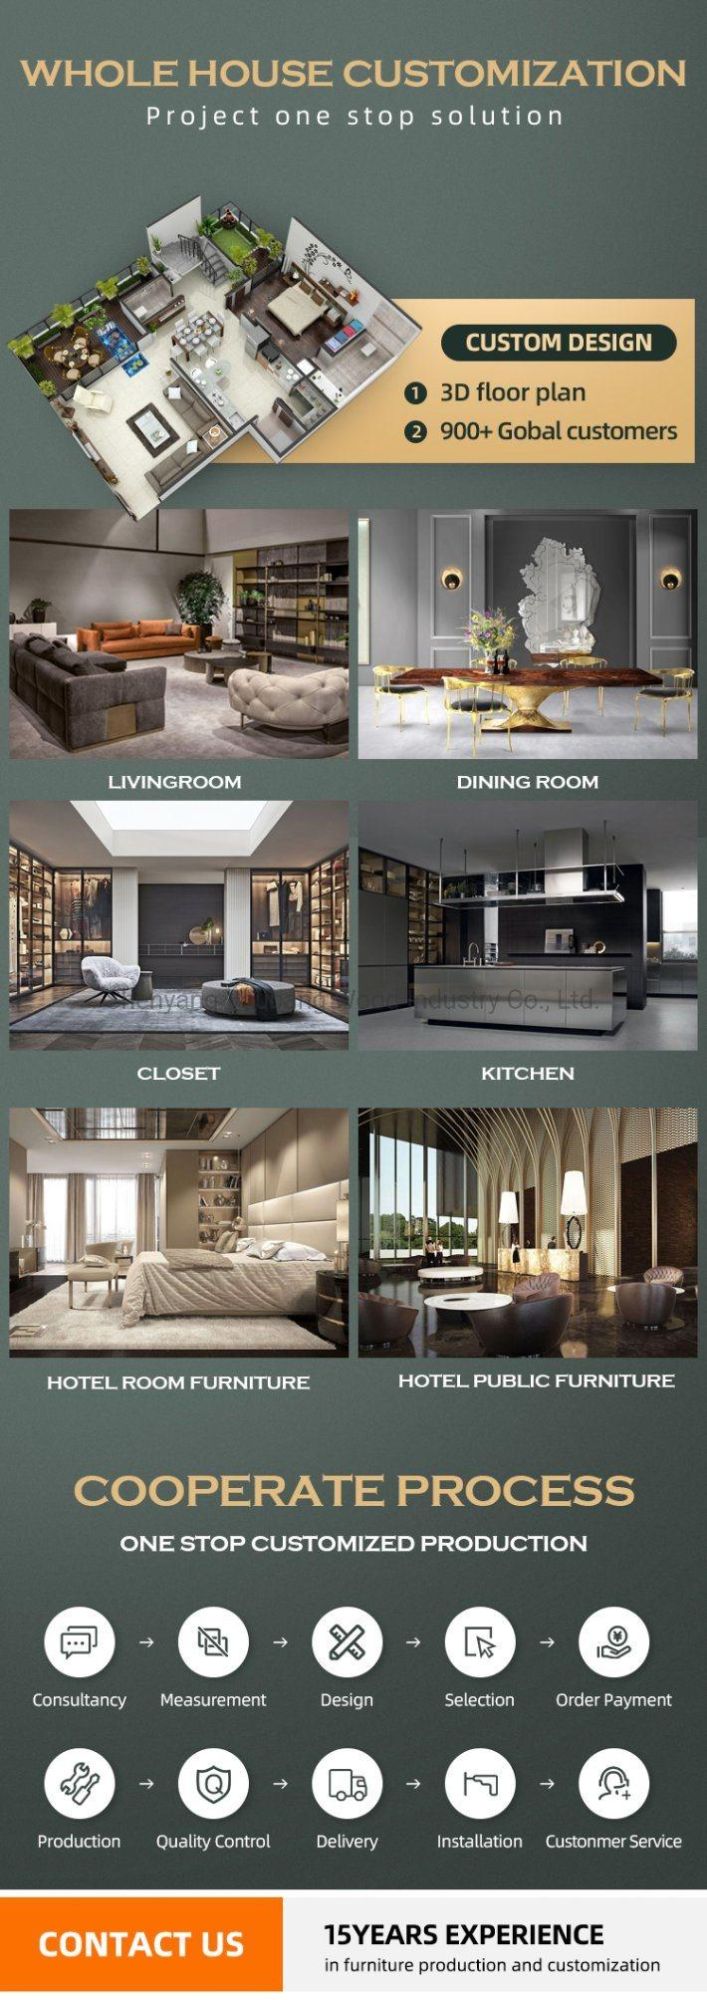 Luxury Customizable Wardrobe High Quality Best Price Bedroom Furniture Set